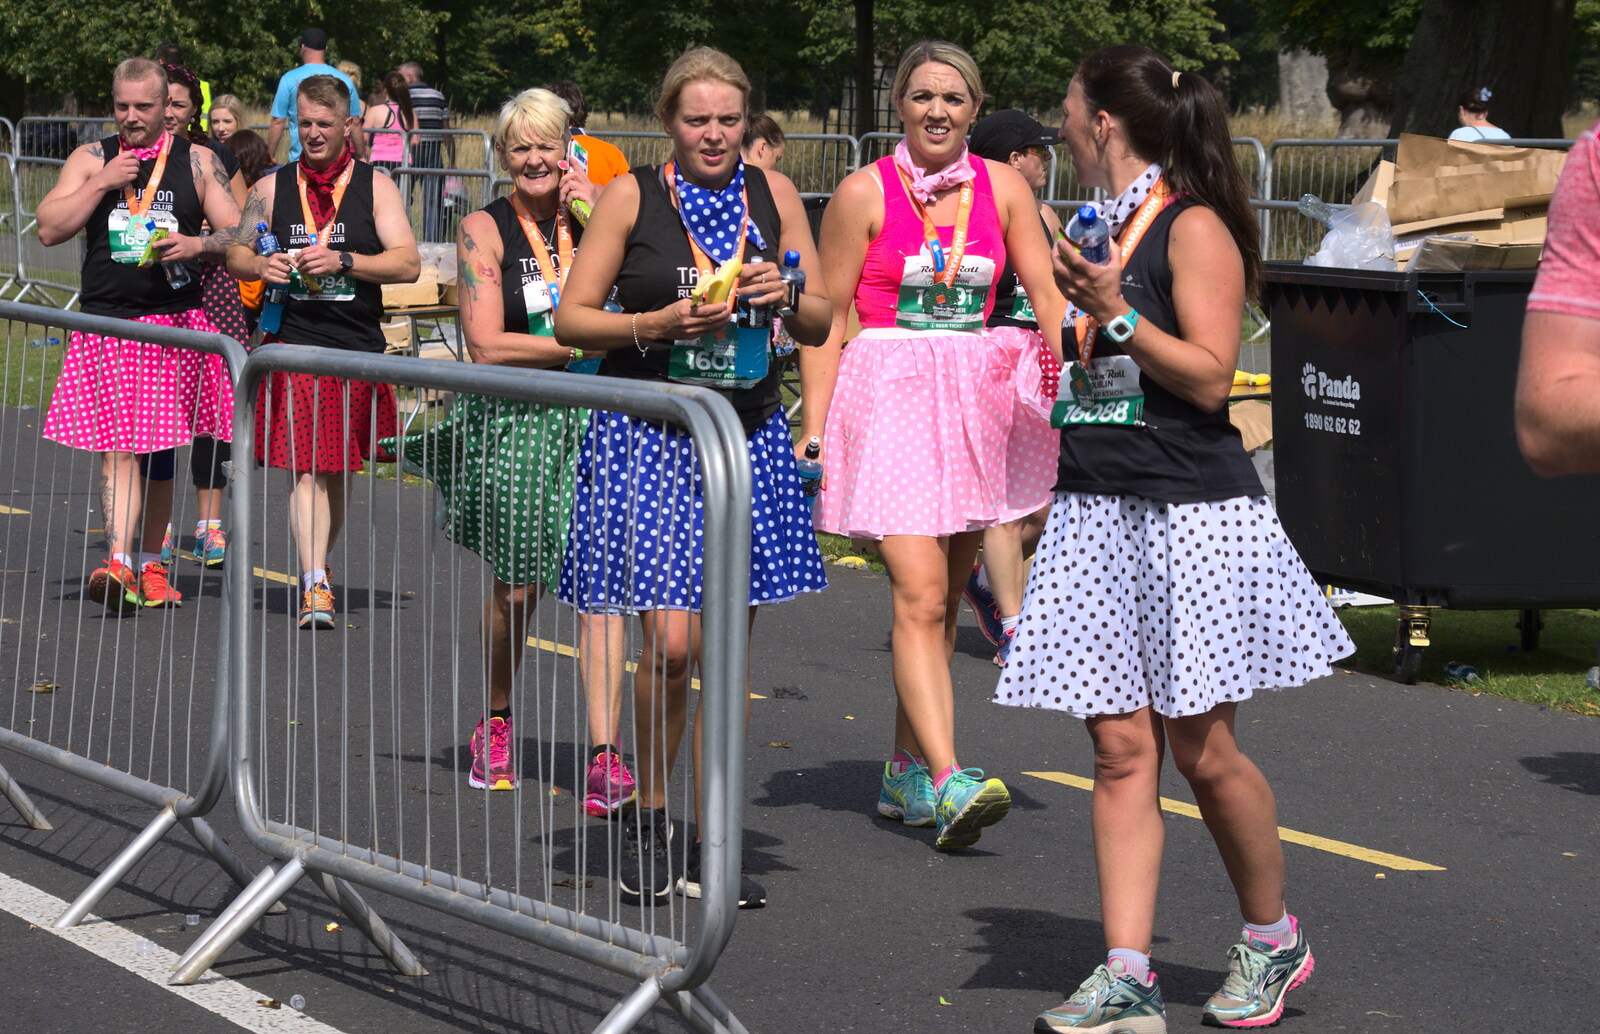 Runners in spotty skirts from Isobel's Rock'n'Roll Half Marathon, Dublin, Ireland - 13th August 2017